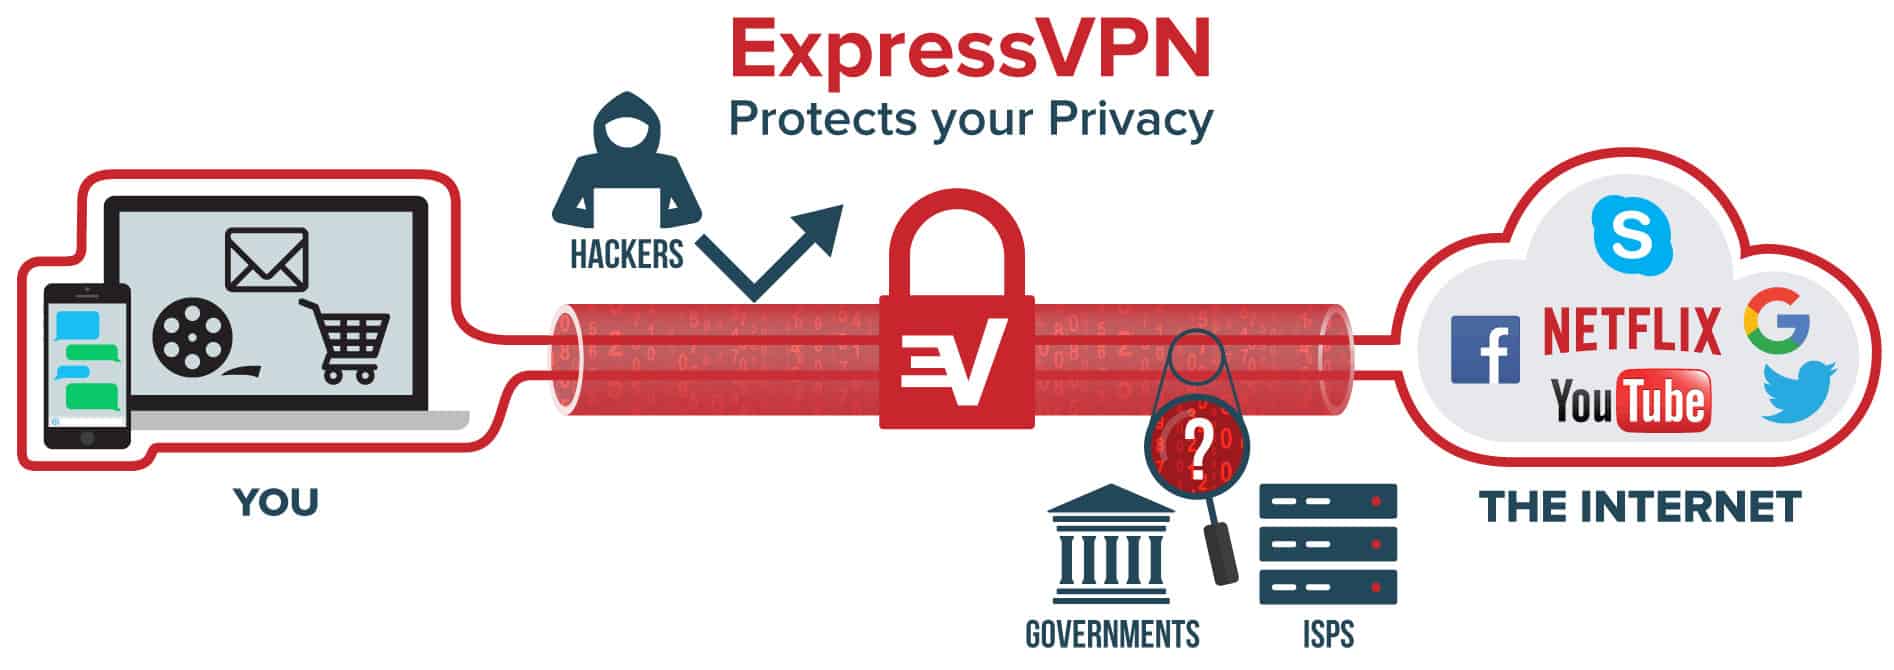 VPN expressVPN